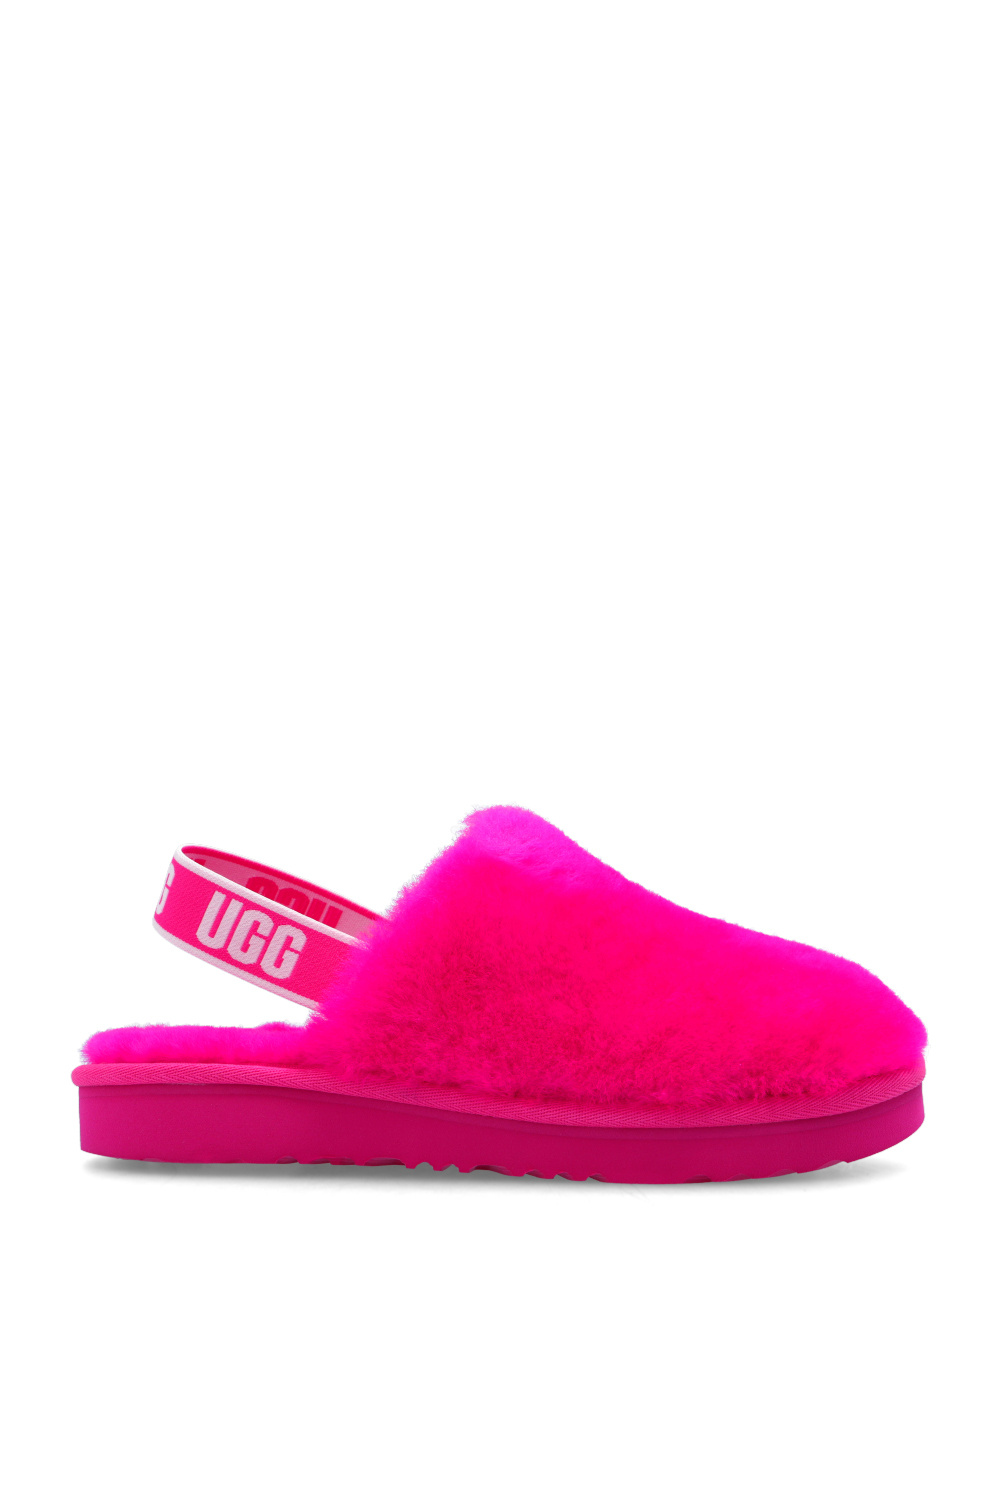 UGG Kids ‘Fluff Yeah Clog’ new shoes